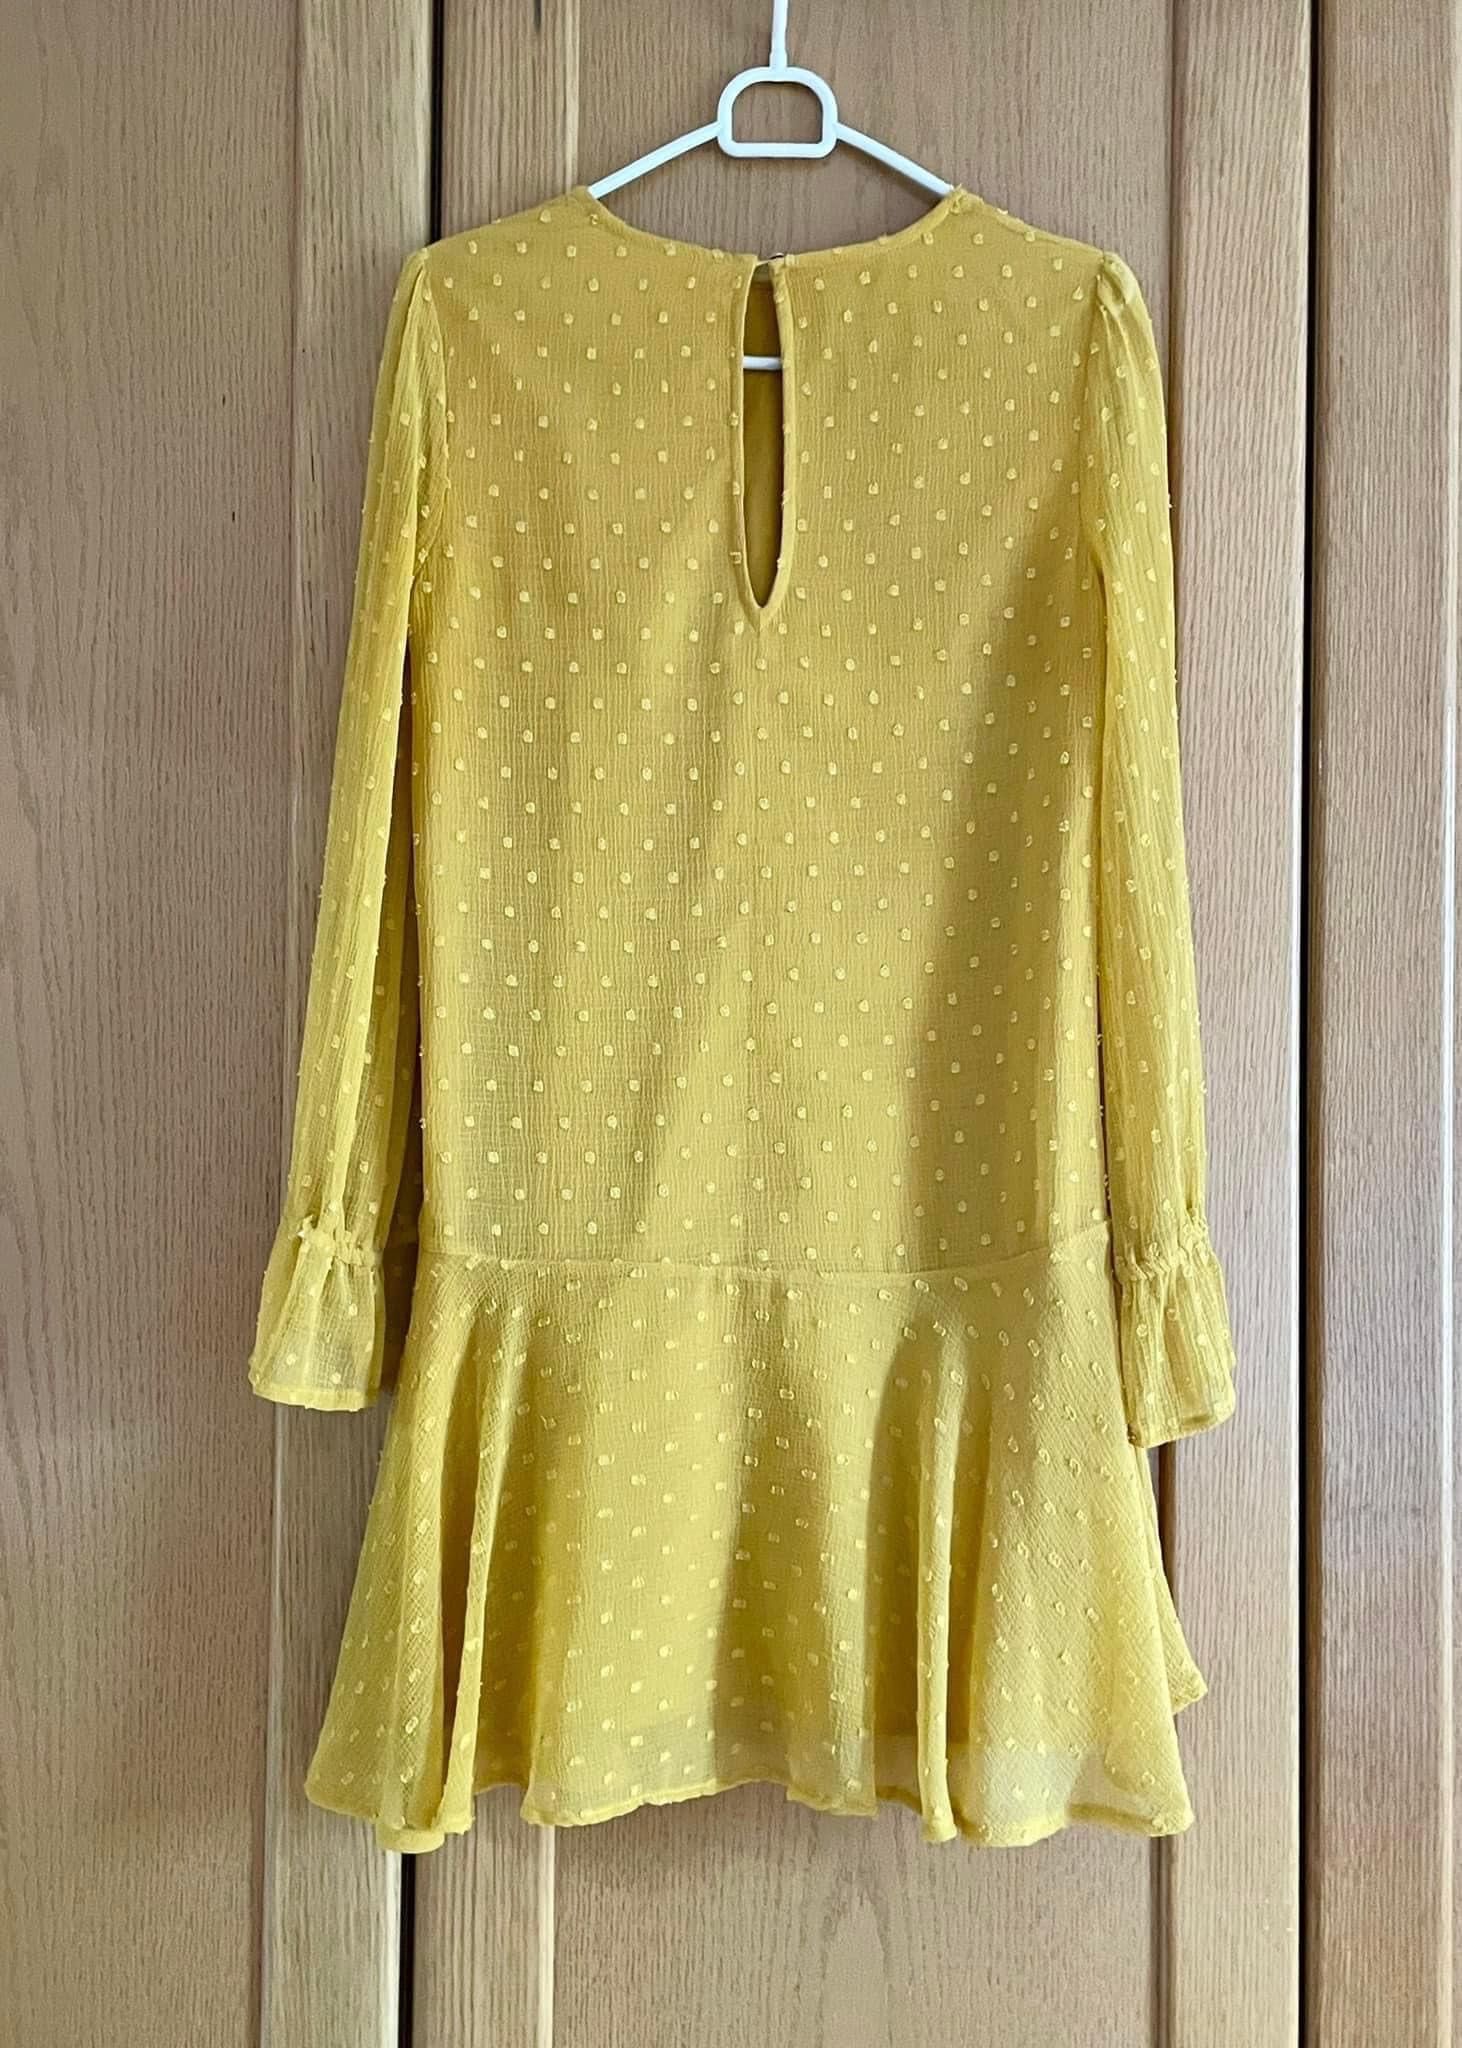 Rochie galbenă, mărime xs/S, marca Zara. 12 lei